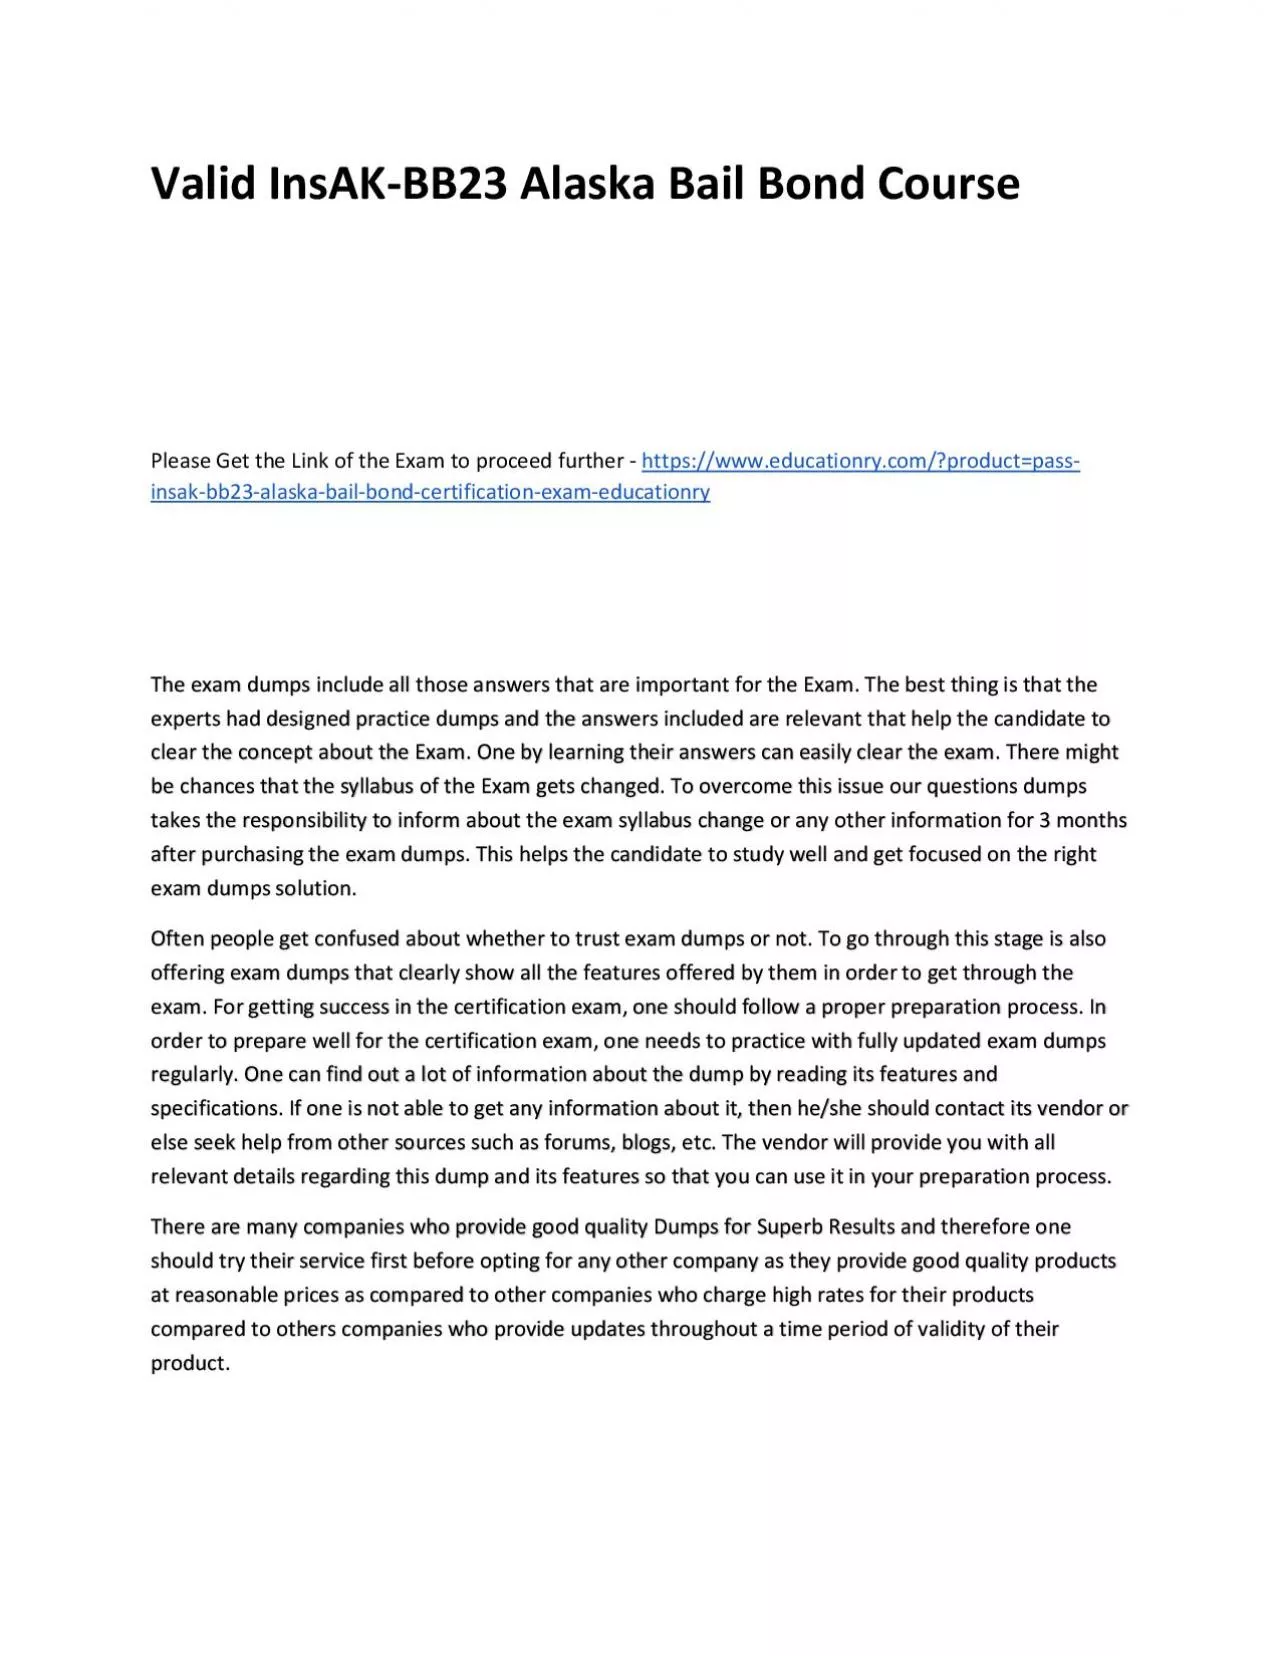 Valid InsAK-BB23 Alaska Bail Bond Practice Course